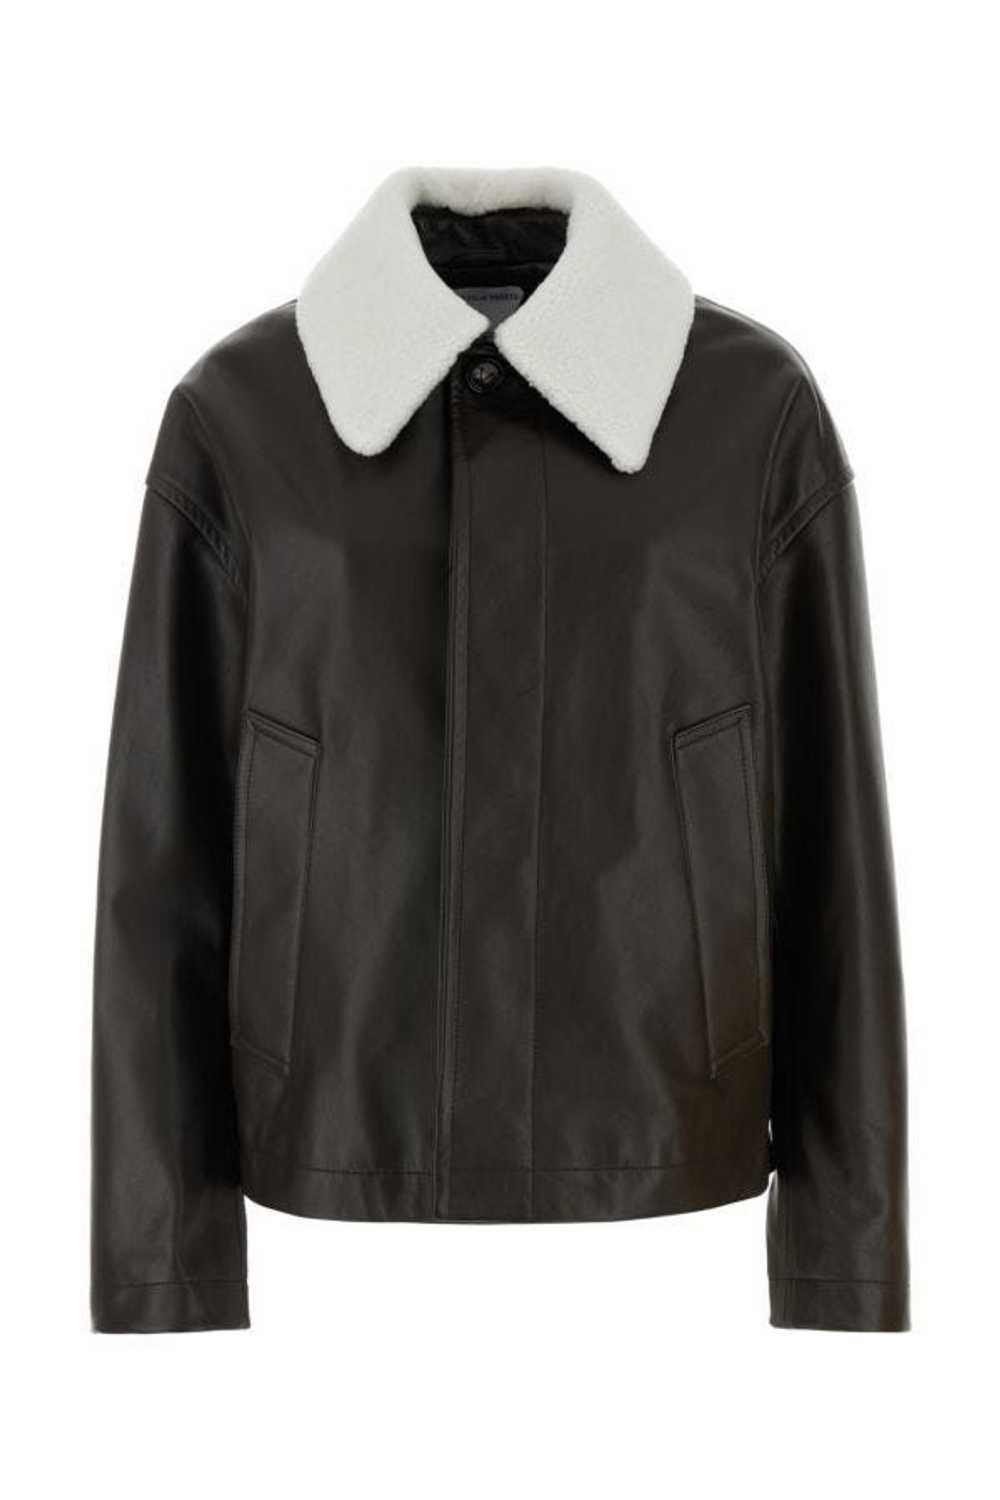 Bottega Veneta Dark Brown Leather Jacket - image 3